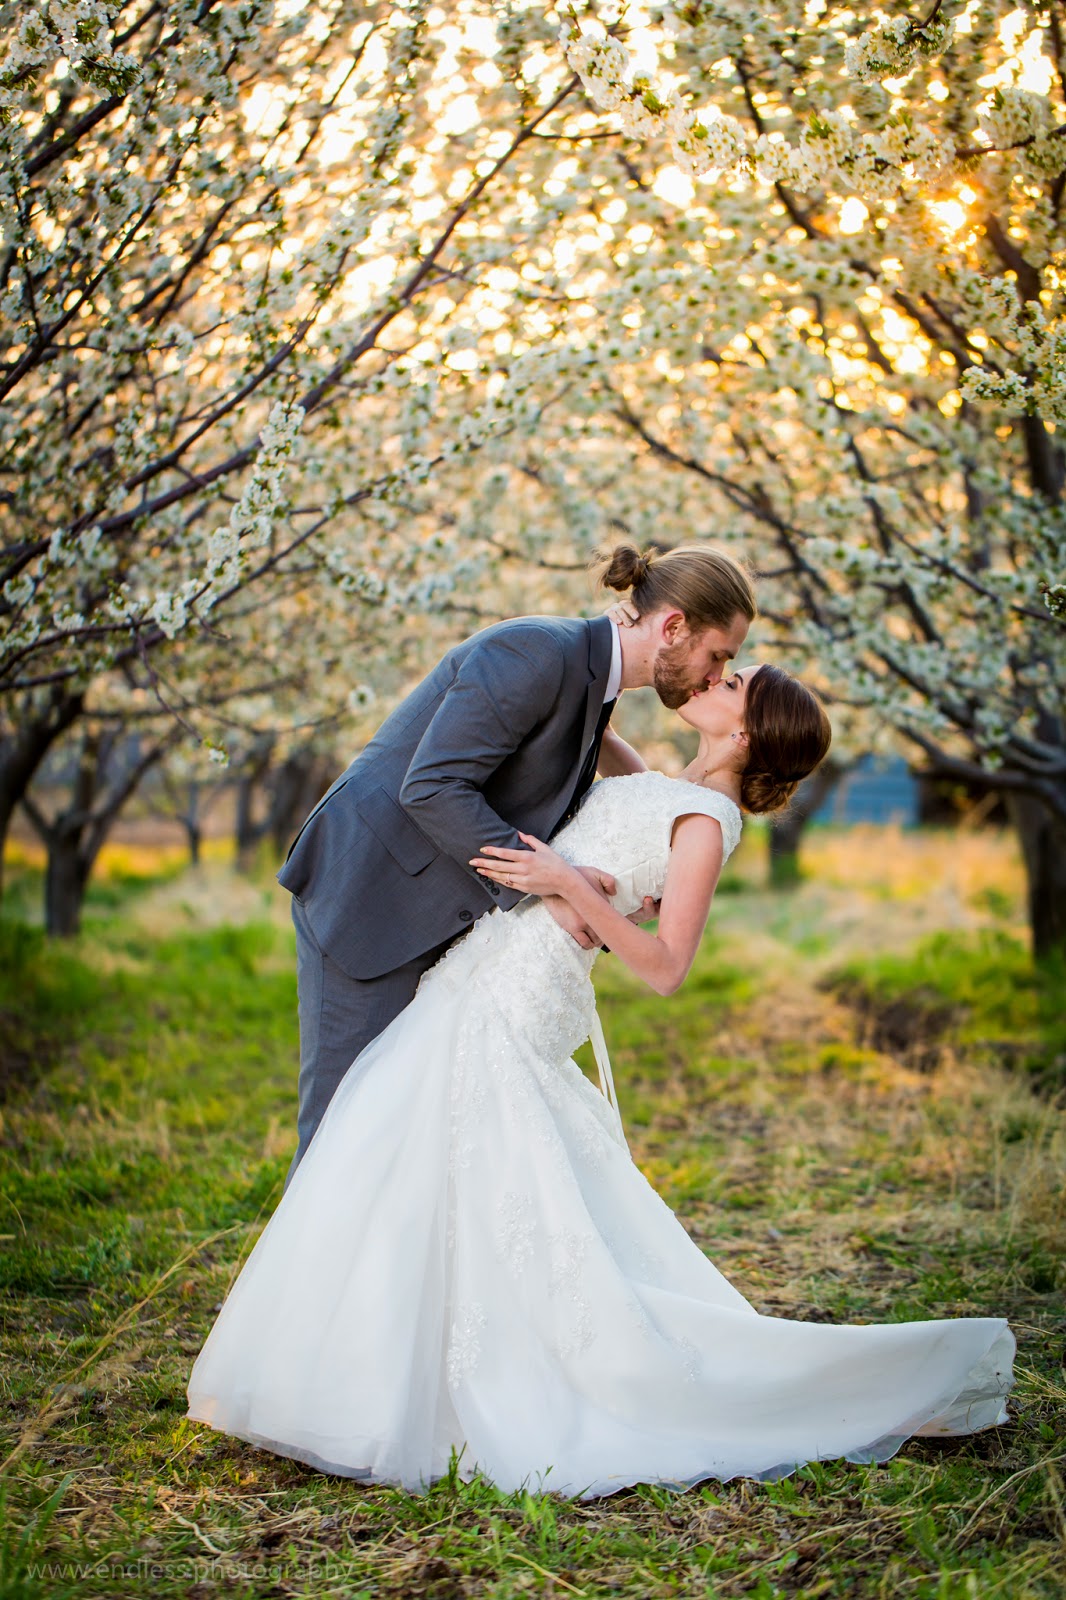 Logan Utah Photographers, Wedding Photography, Weddings, Bridals, Spring, Orchard, Blossoms, Couple, Wedding Dress, Logan Utah, Endless Photography